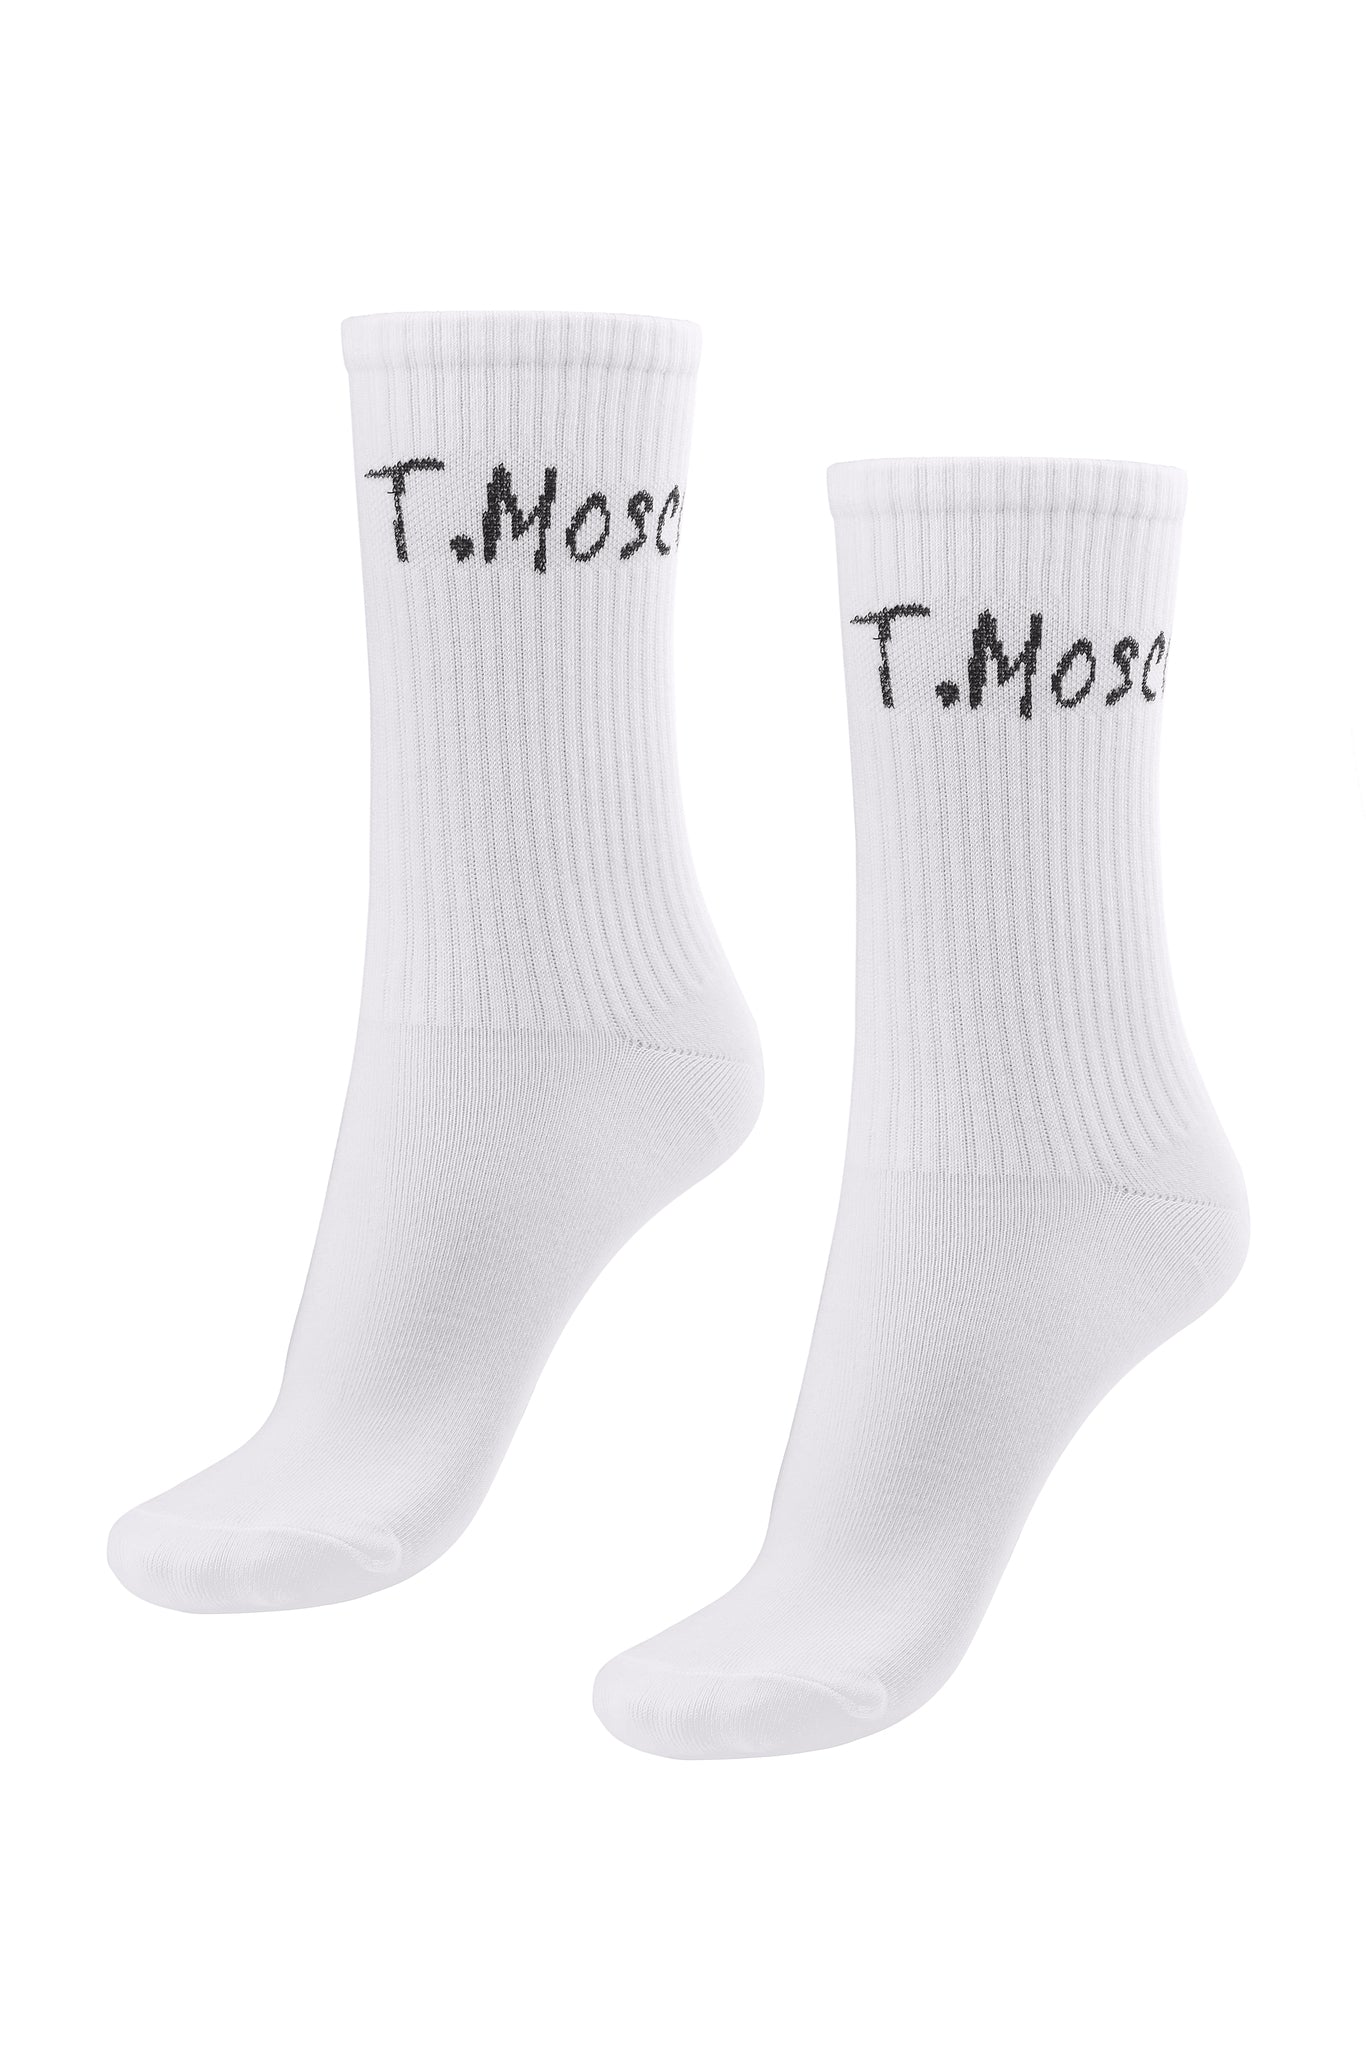 Socks T.Mosca